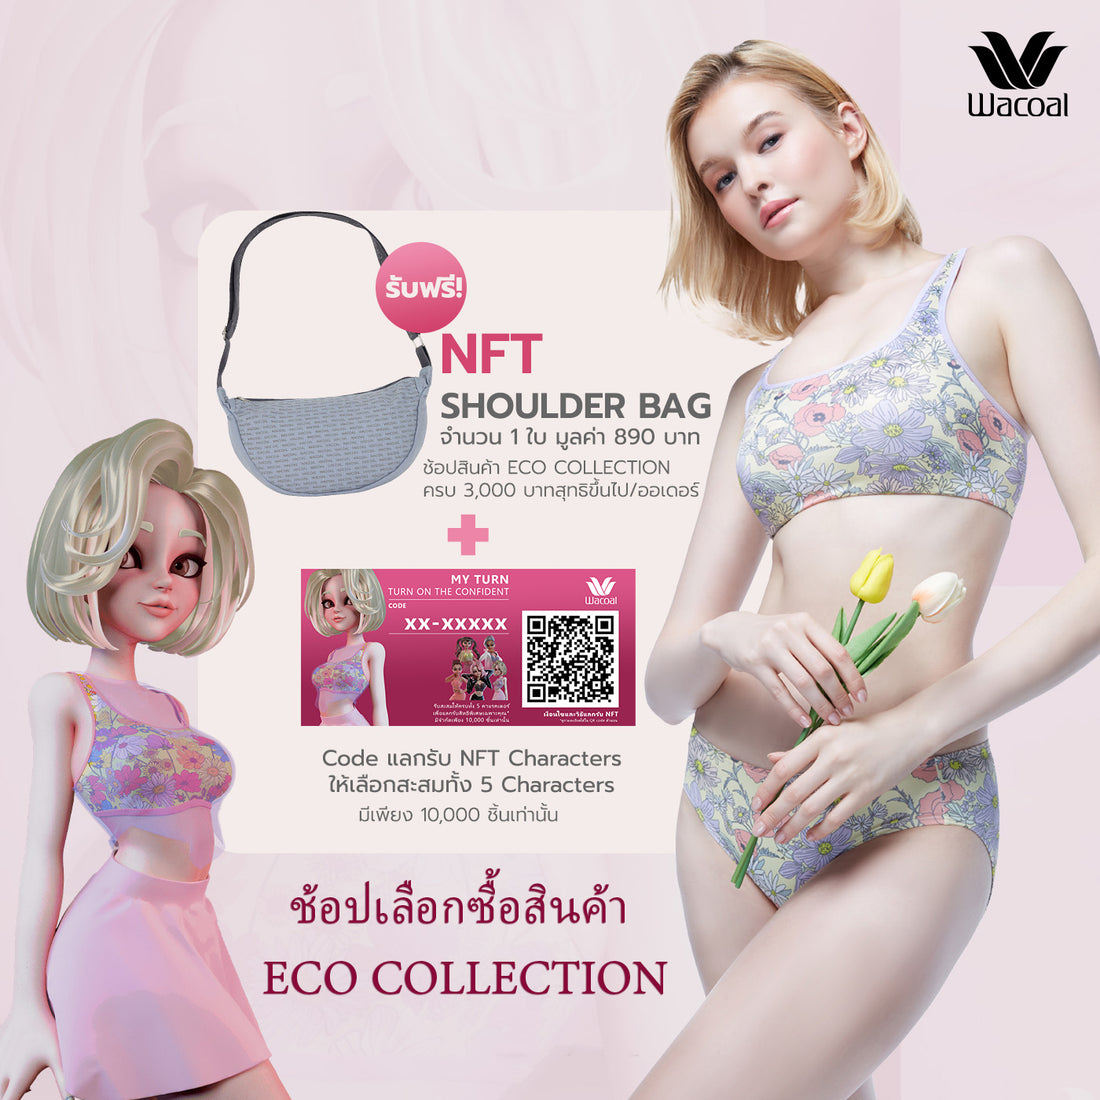 Wacoal Teen underwear for teenagers underwired bra model WBT501 orange – Thai  Wacoal Public Company Limited